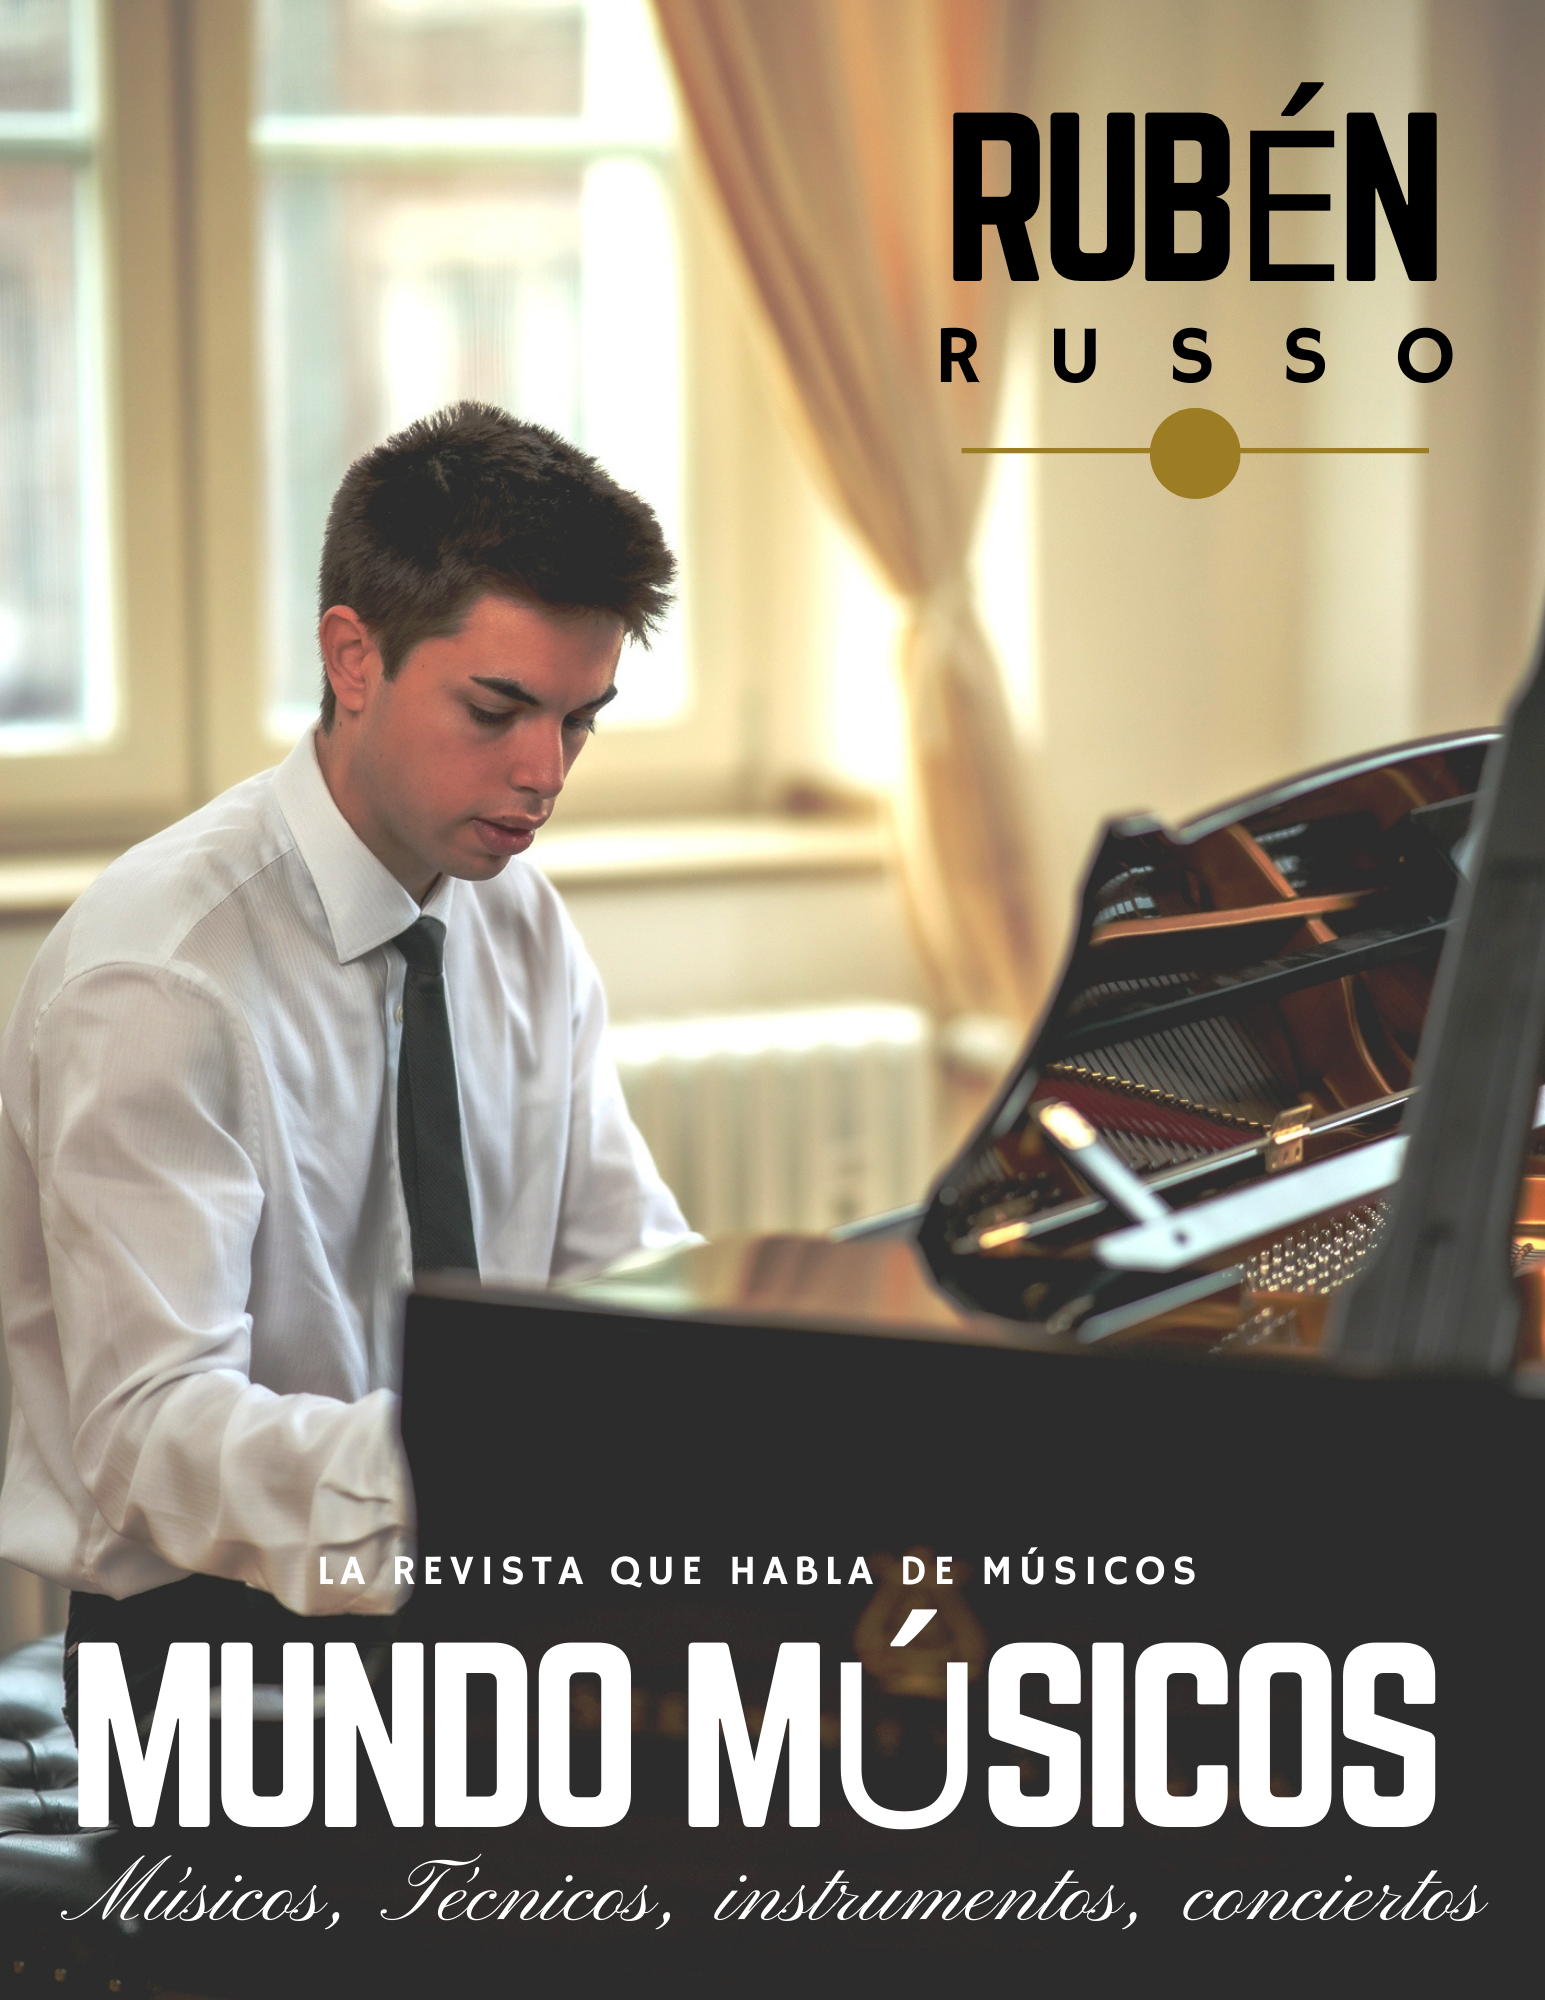 Rubén Russo, Pianista Virtuoso